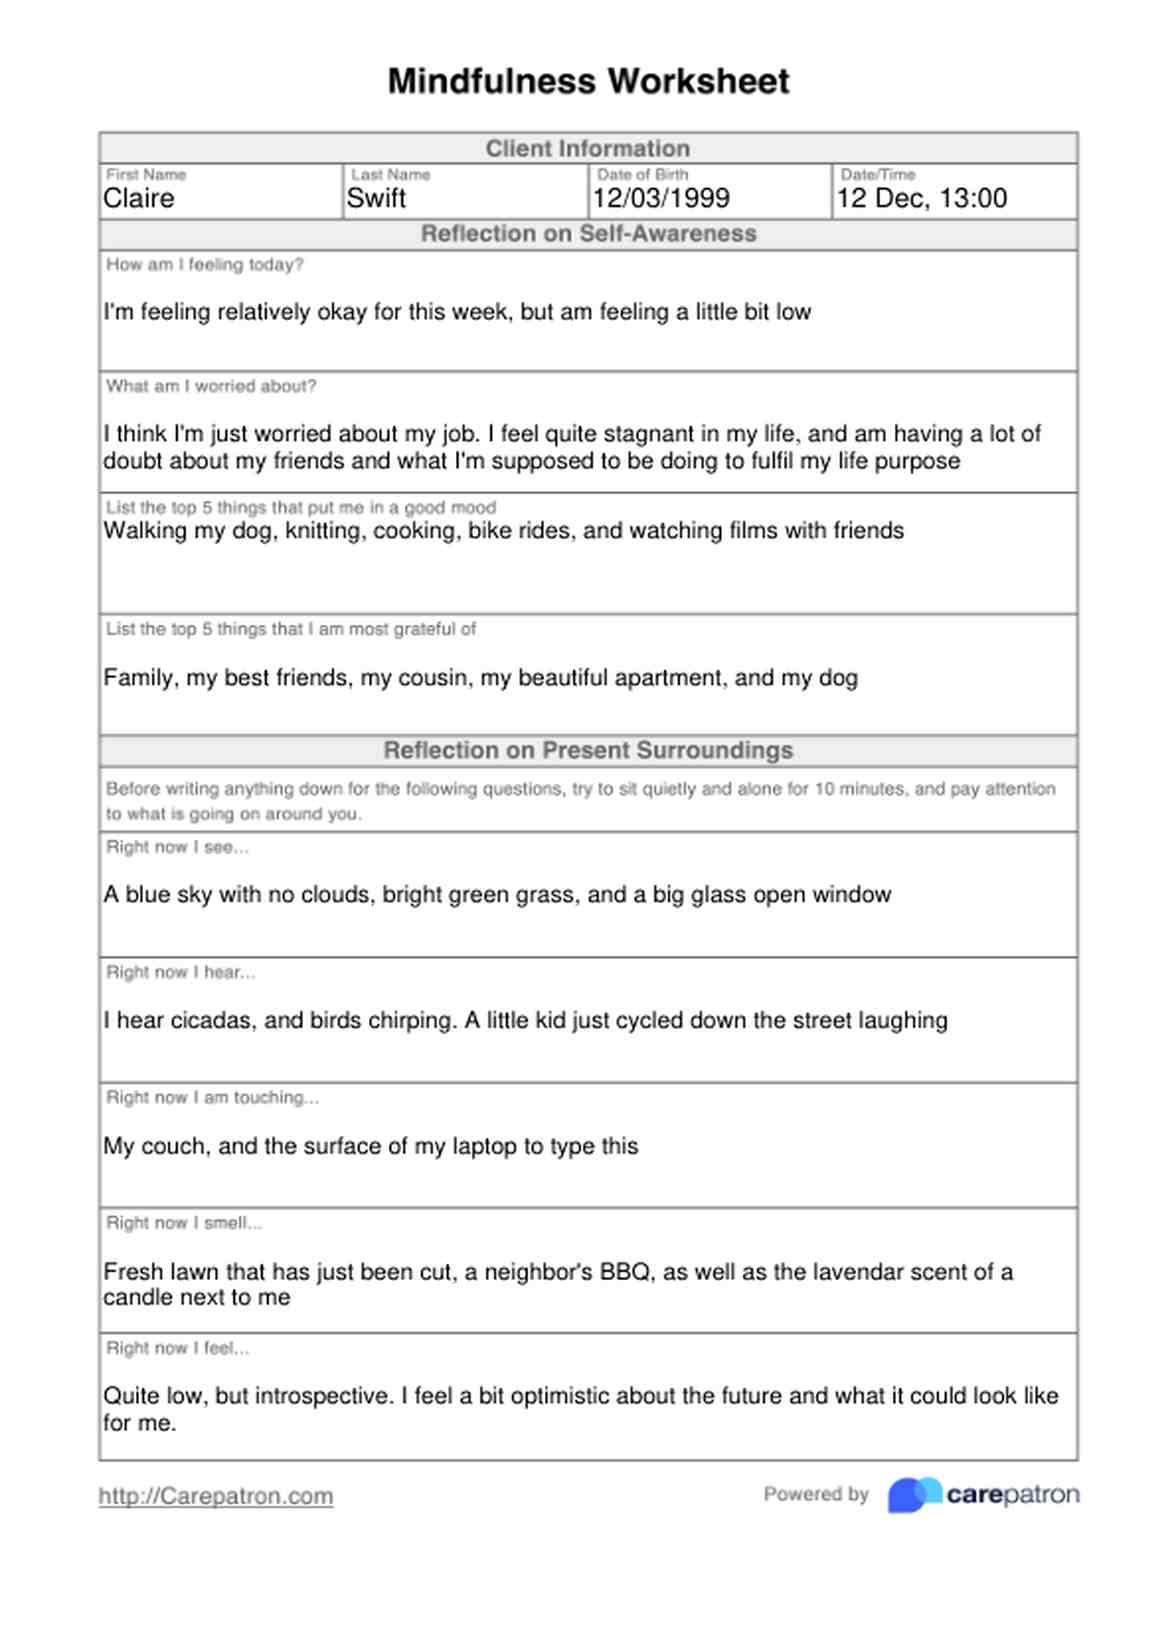 Mindfulness Worksheets PDF Example